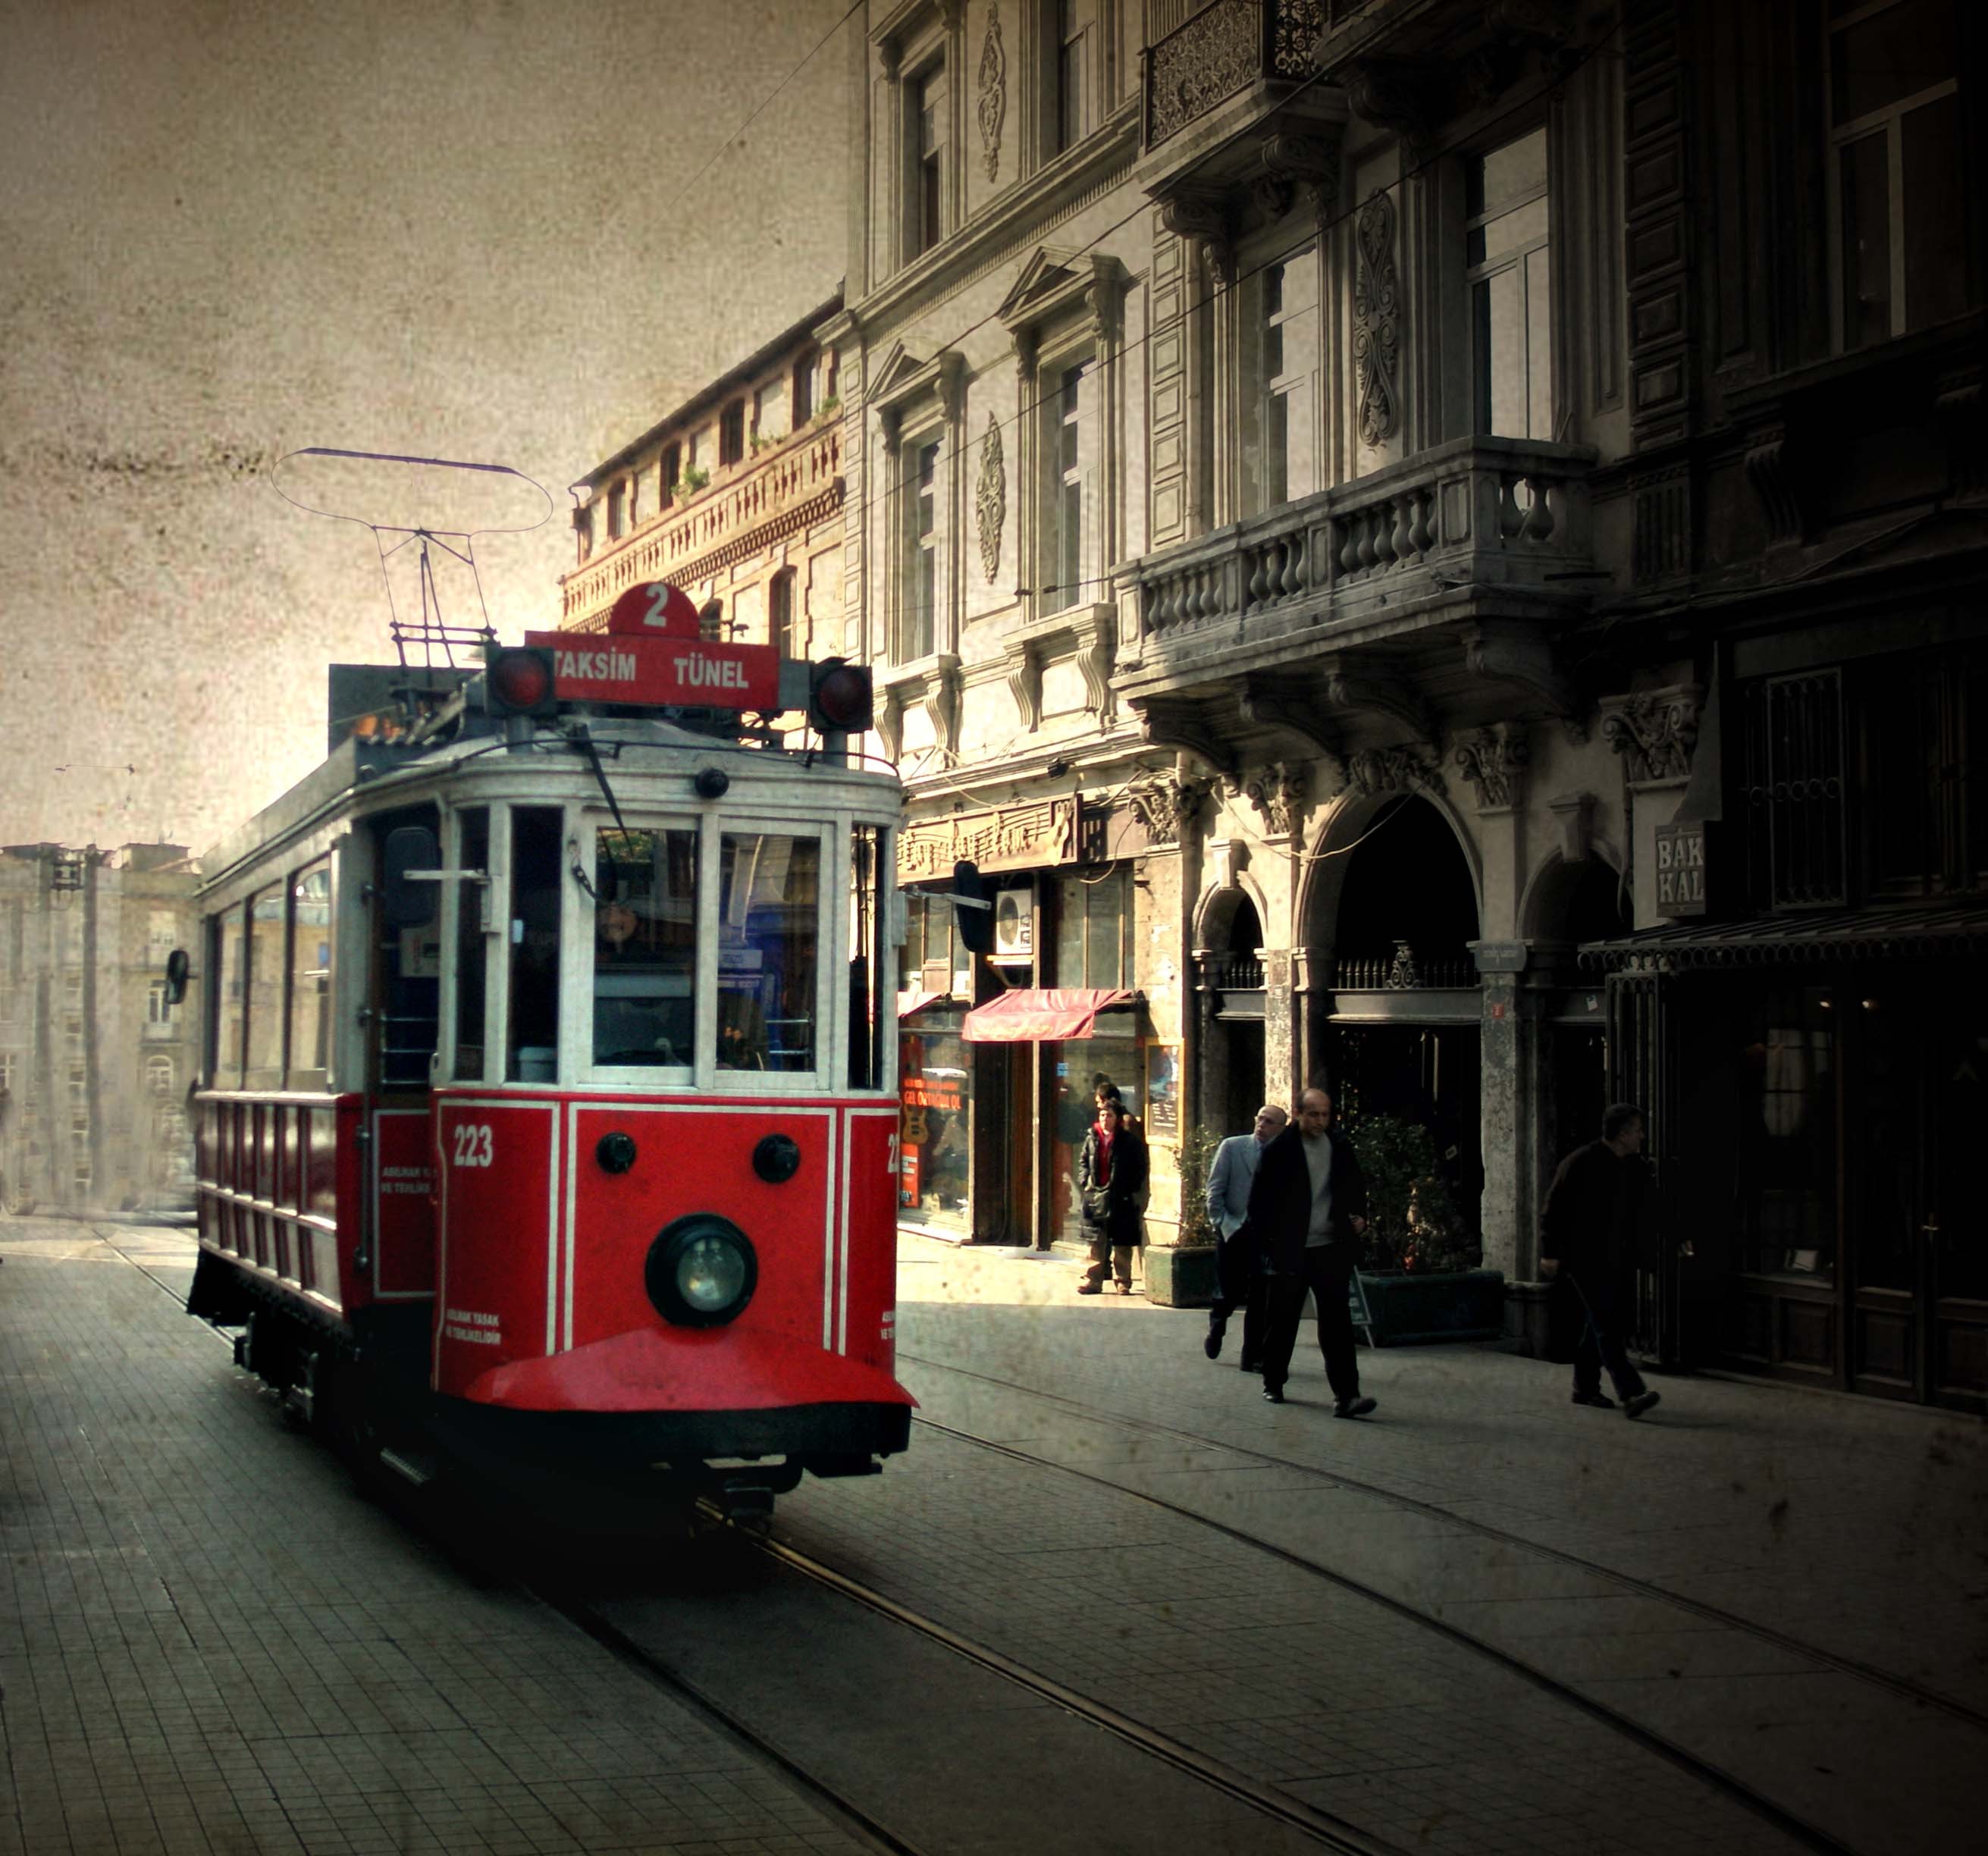 cityscapes, buildings, tram, Turkey, Istanbul, taksim, Istiklal street Wallpaper / WallpaperJam.com